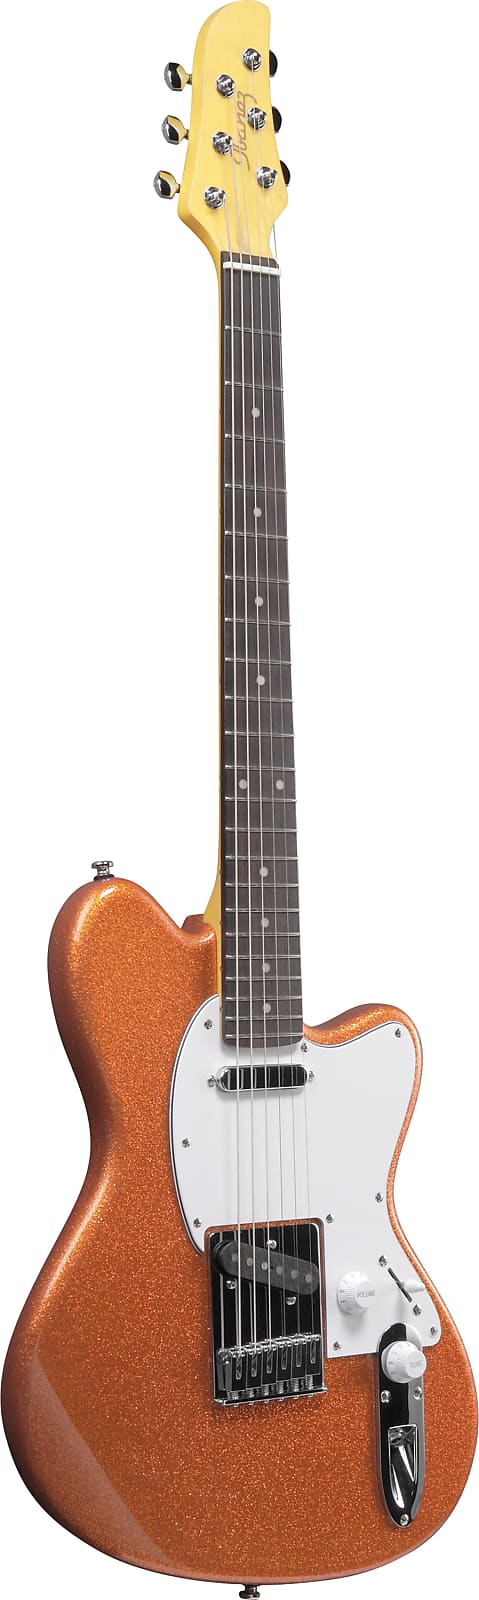 Ibanez YY20 Yvette Young Signature Electric Guitar Orange Cream Sparkle